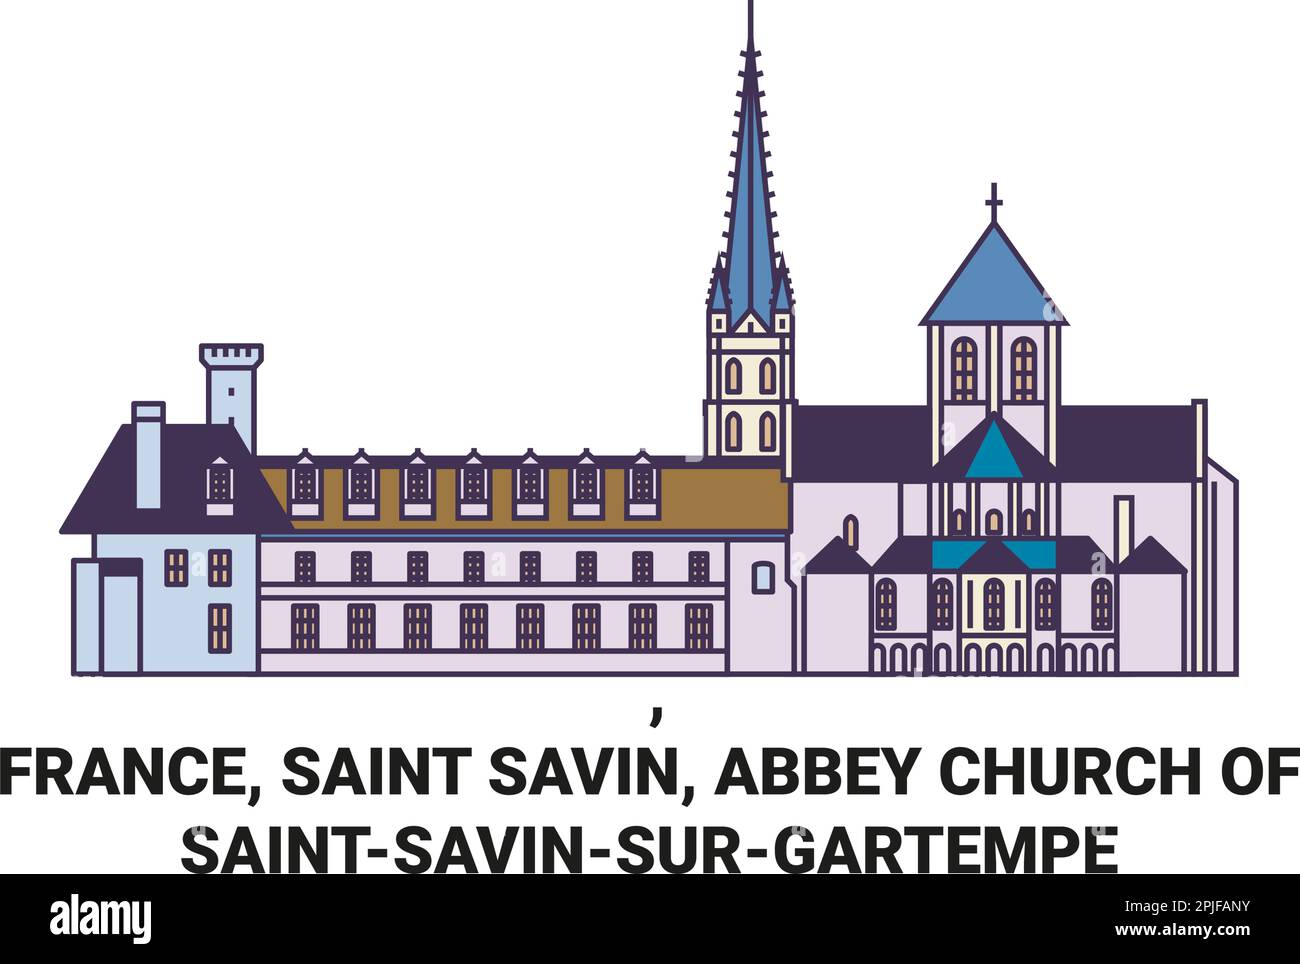 France, Saint Savin, Abbey Church Of Saintsavinsurgartempe travel landmark vector illustration Stock Vector